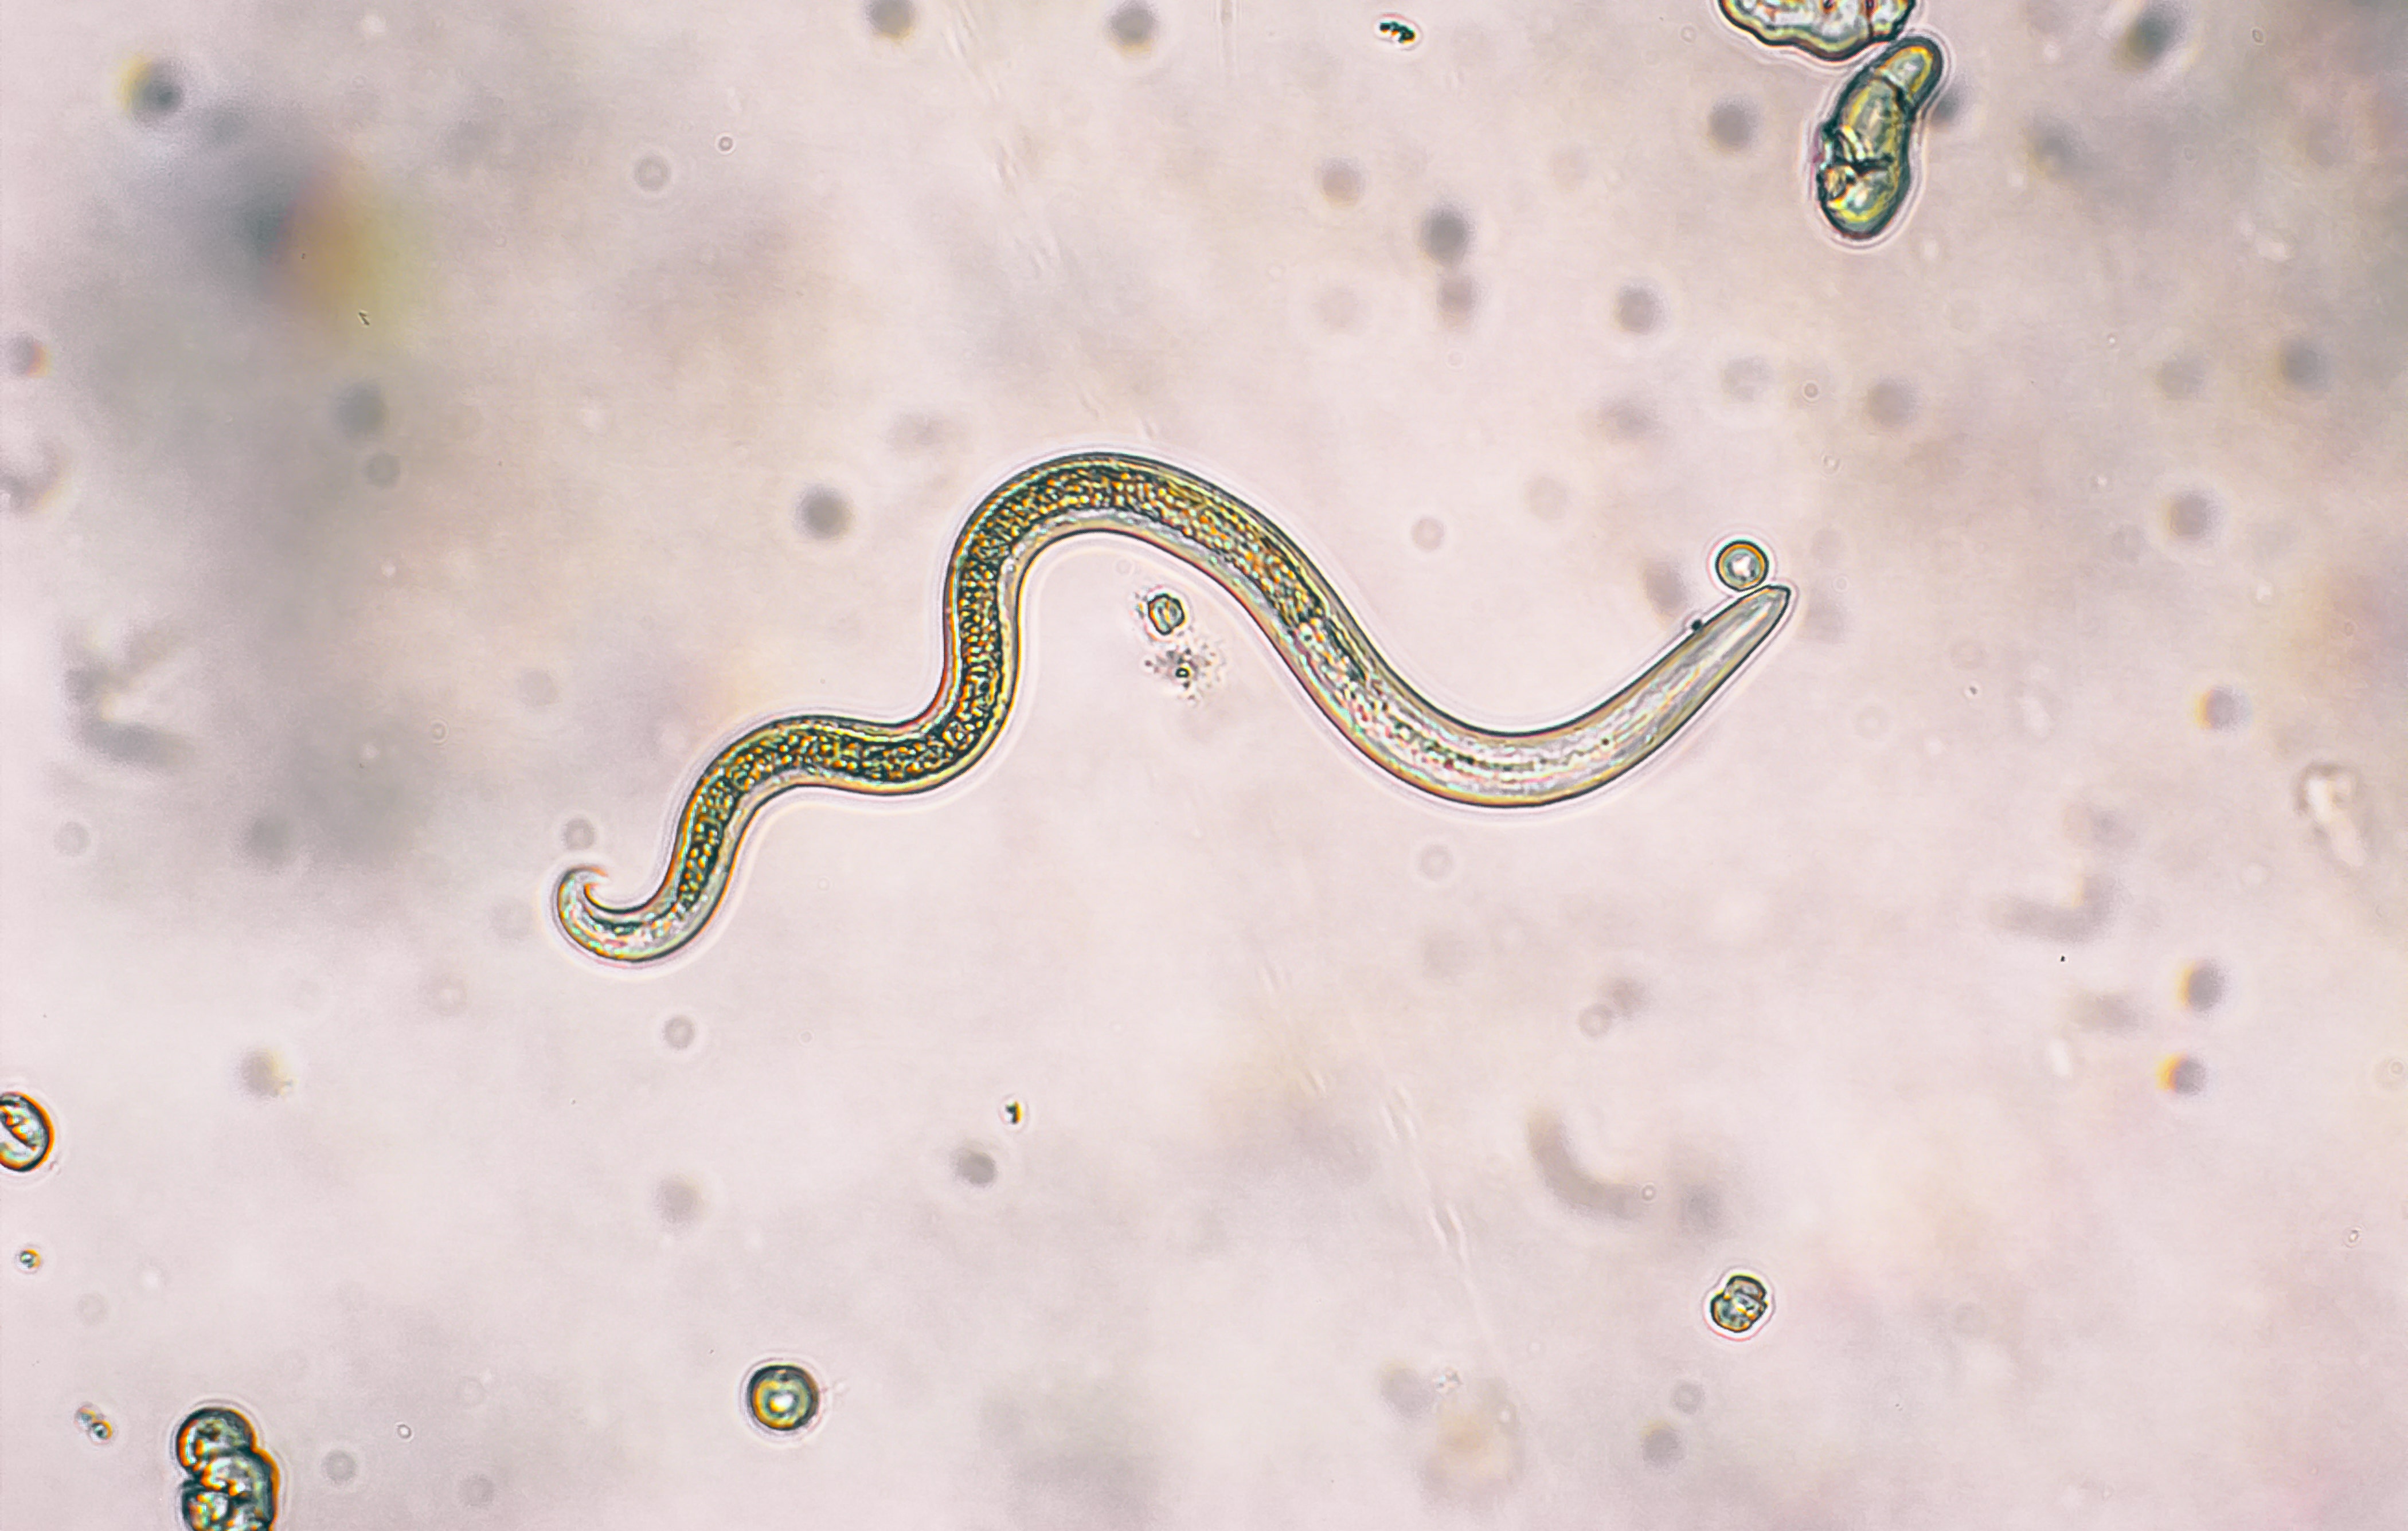 parasite worm in eye